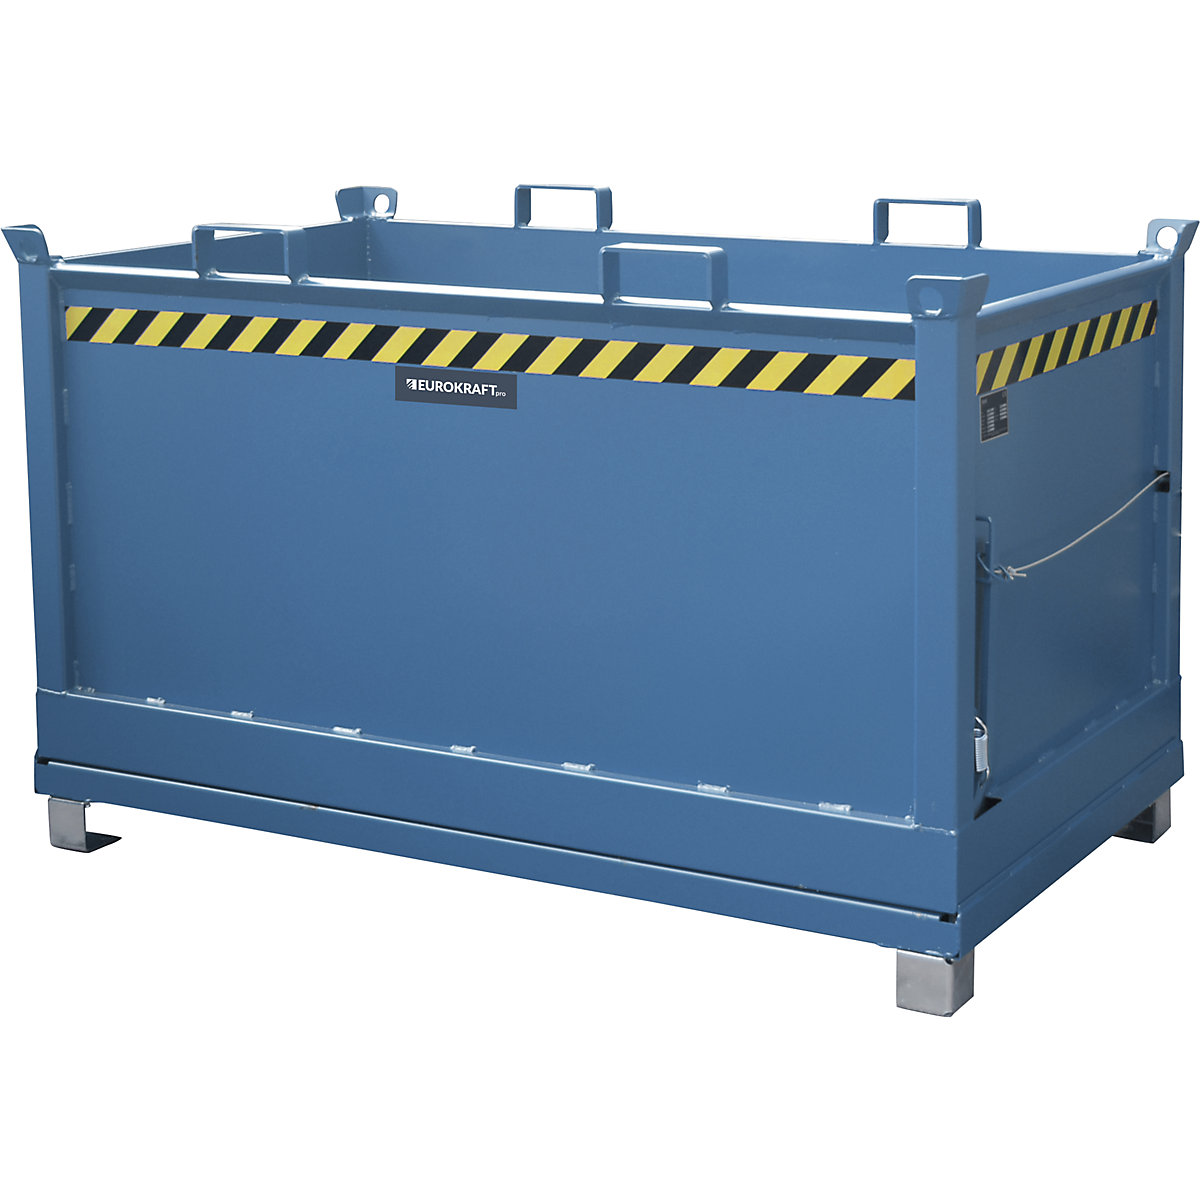 Bodemklepcontainer – eurokraft pro, inhoud 1,5 m³, gentiaanblauw RAL 5010-12